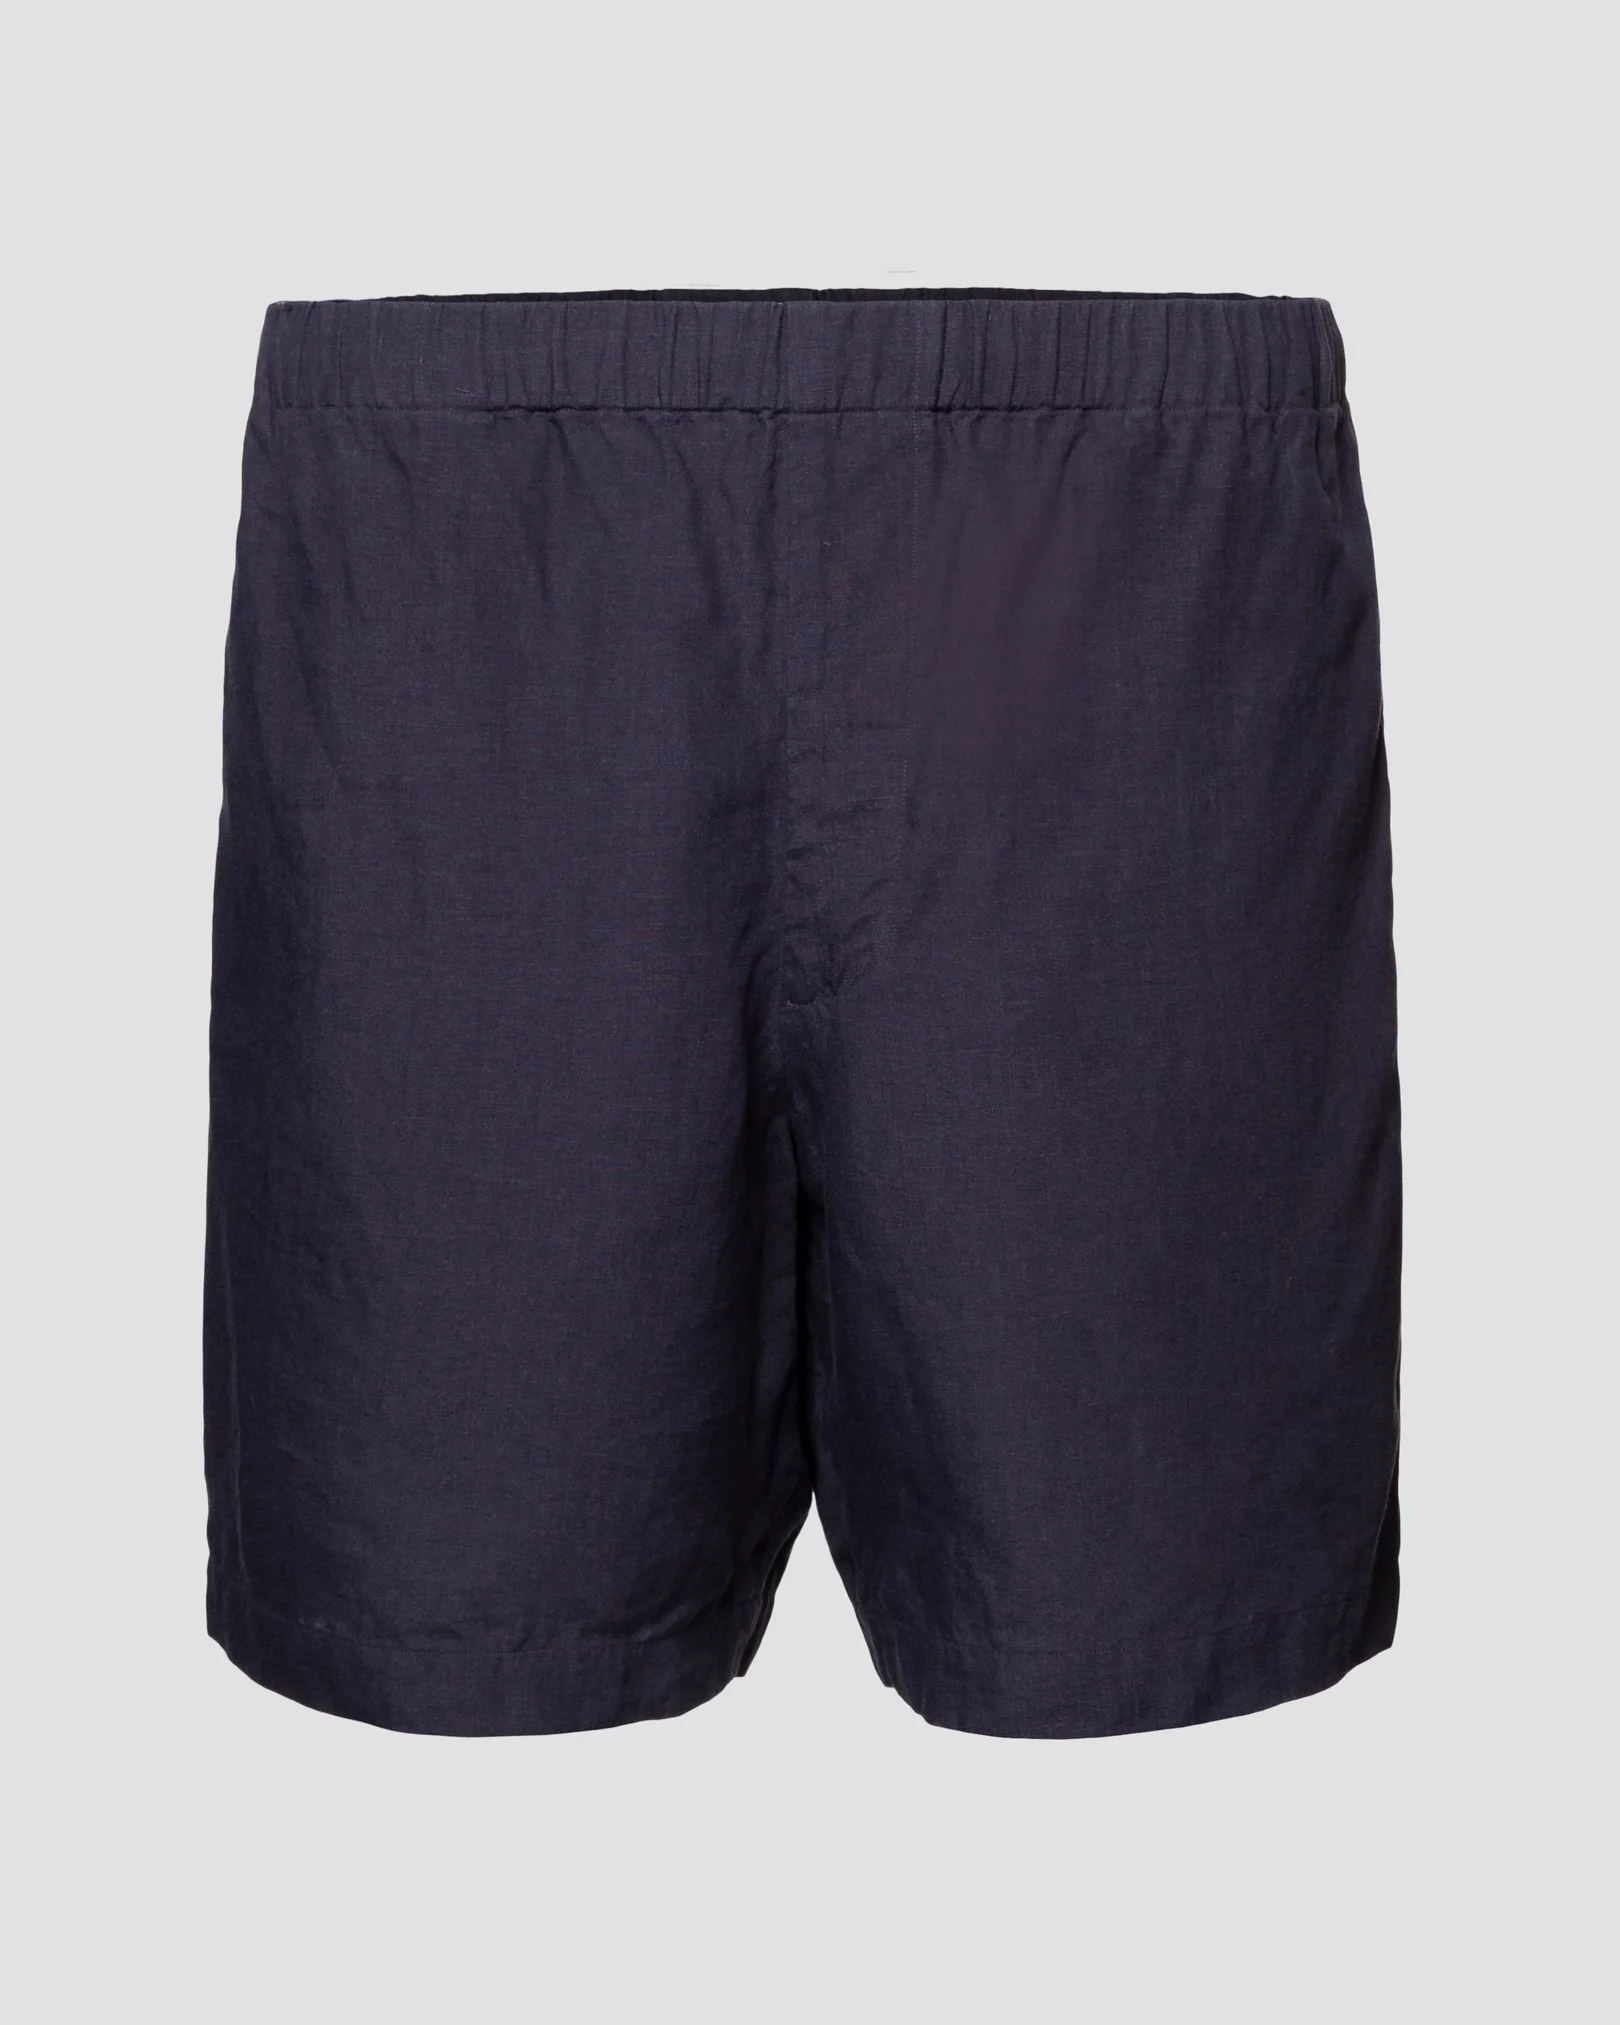 Eton - navy blue plain linen shorts